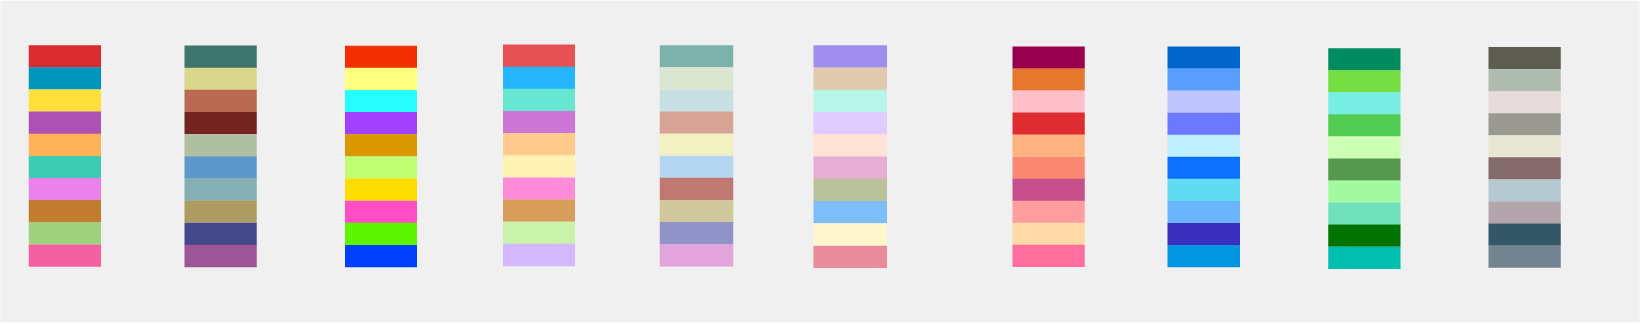 10-color graphics showing the new Unique Values color ramps